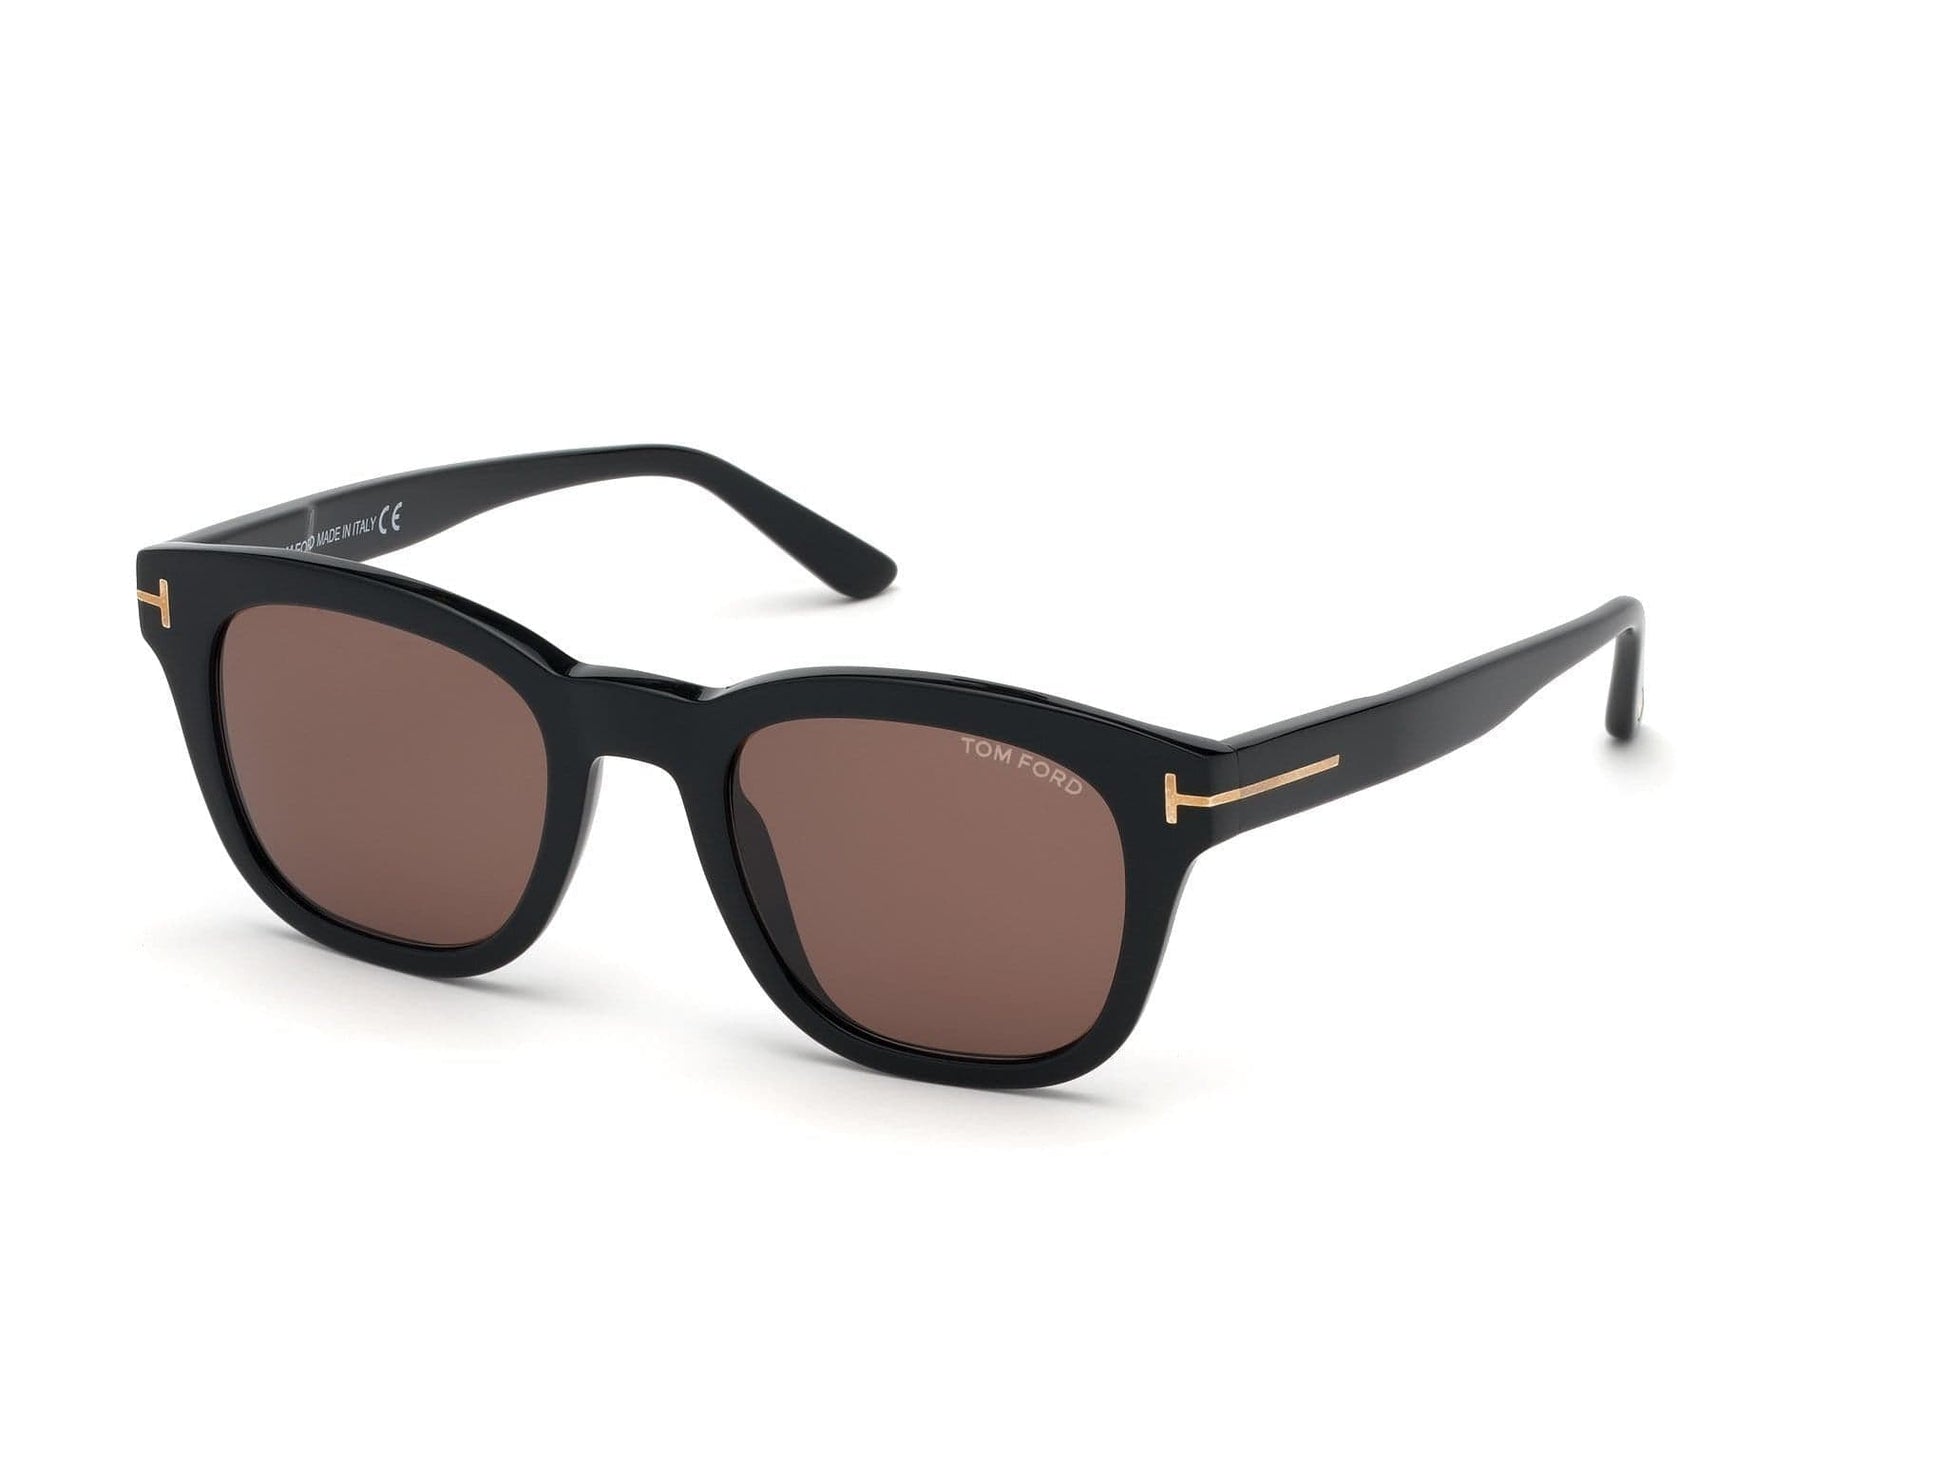 Tom Ford FT0676-F Eugenio Geometric Sunglasses 01E-01E - Shiny Black/ Brown Lenses